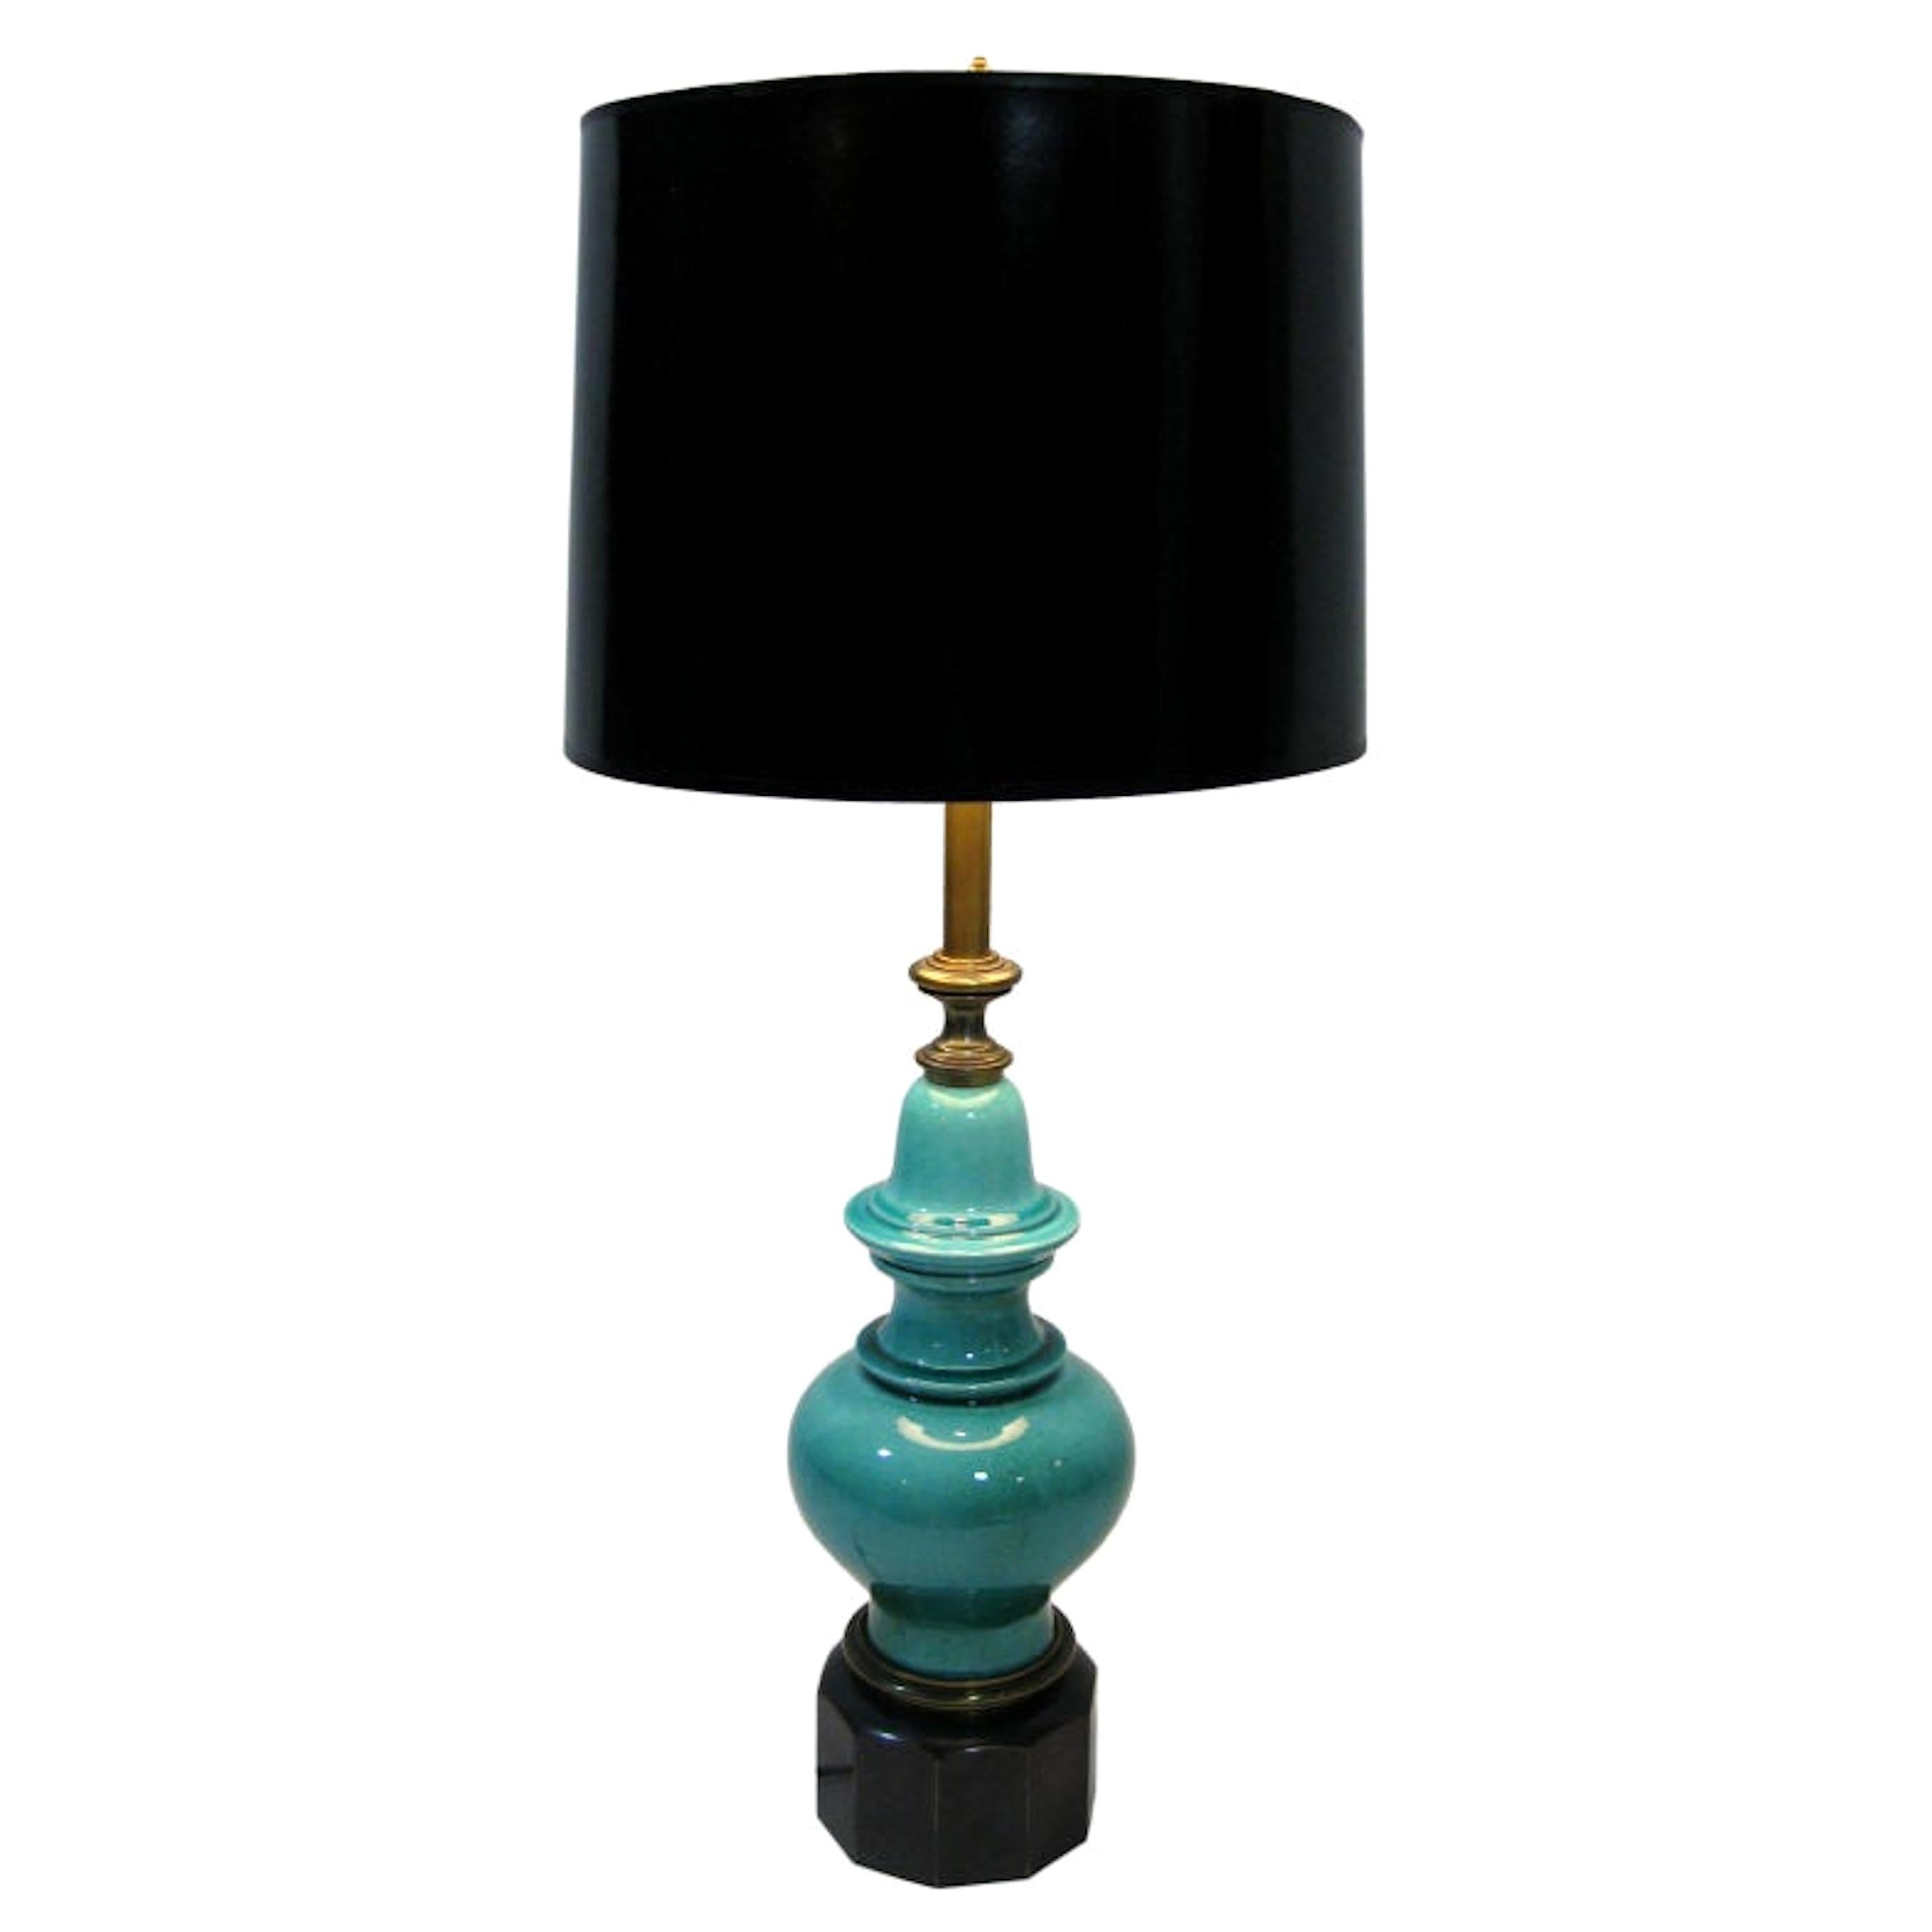 1950s Stiffel Lamp Turquoise Crackle Glaze Ceramic and Brass